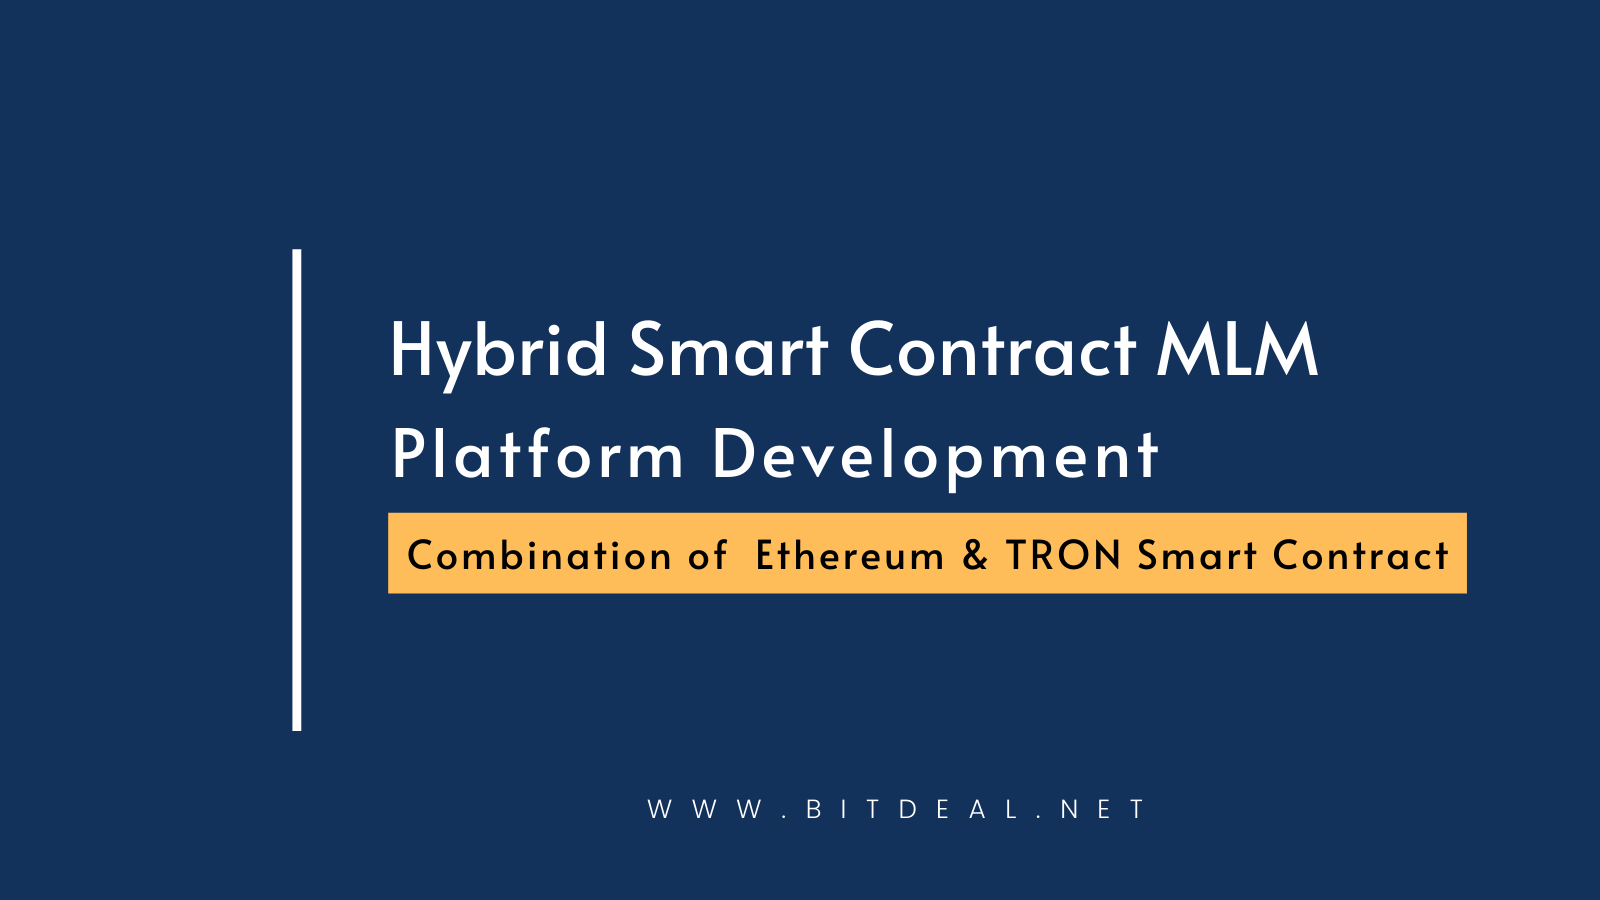 Hybrid Smart Contract Based MLM Platform Development on Ethereum & TRON